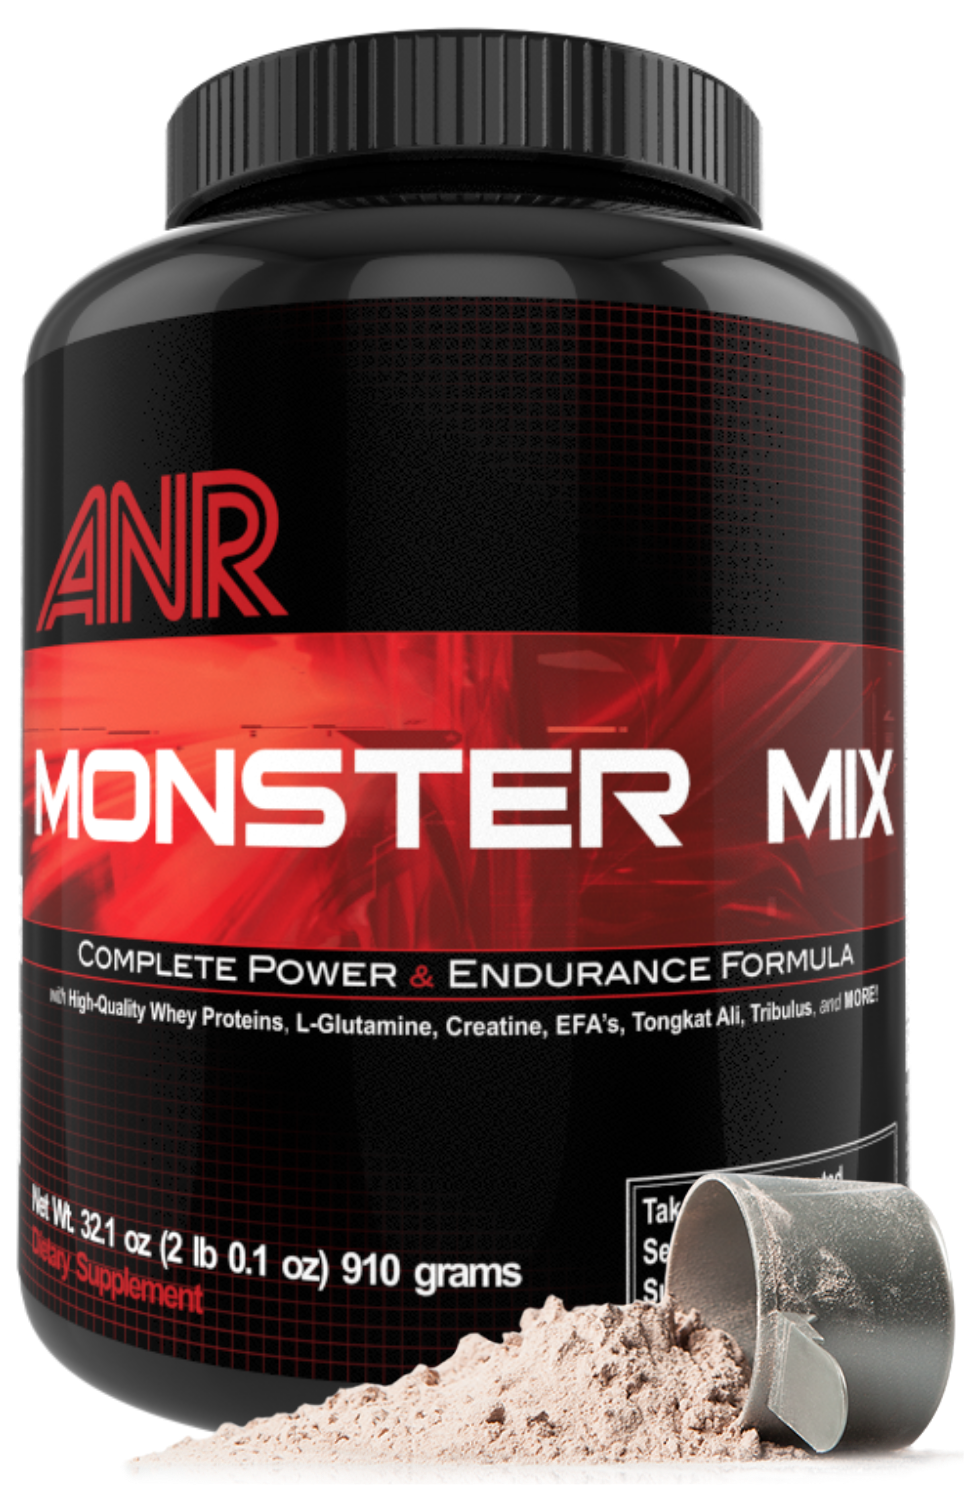 Monster Mix Complete Power & Endurance Formula - TeamANR